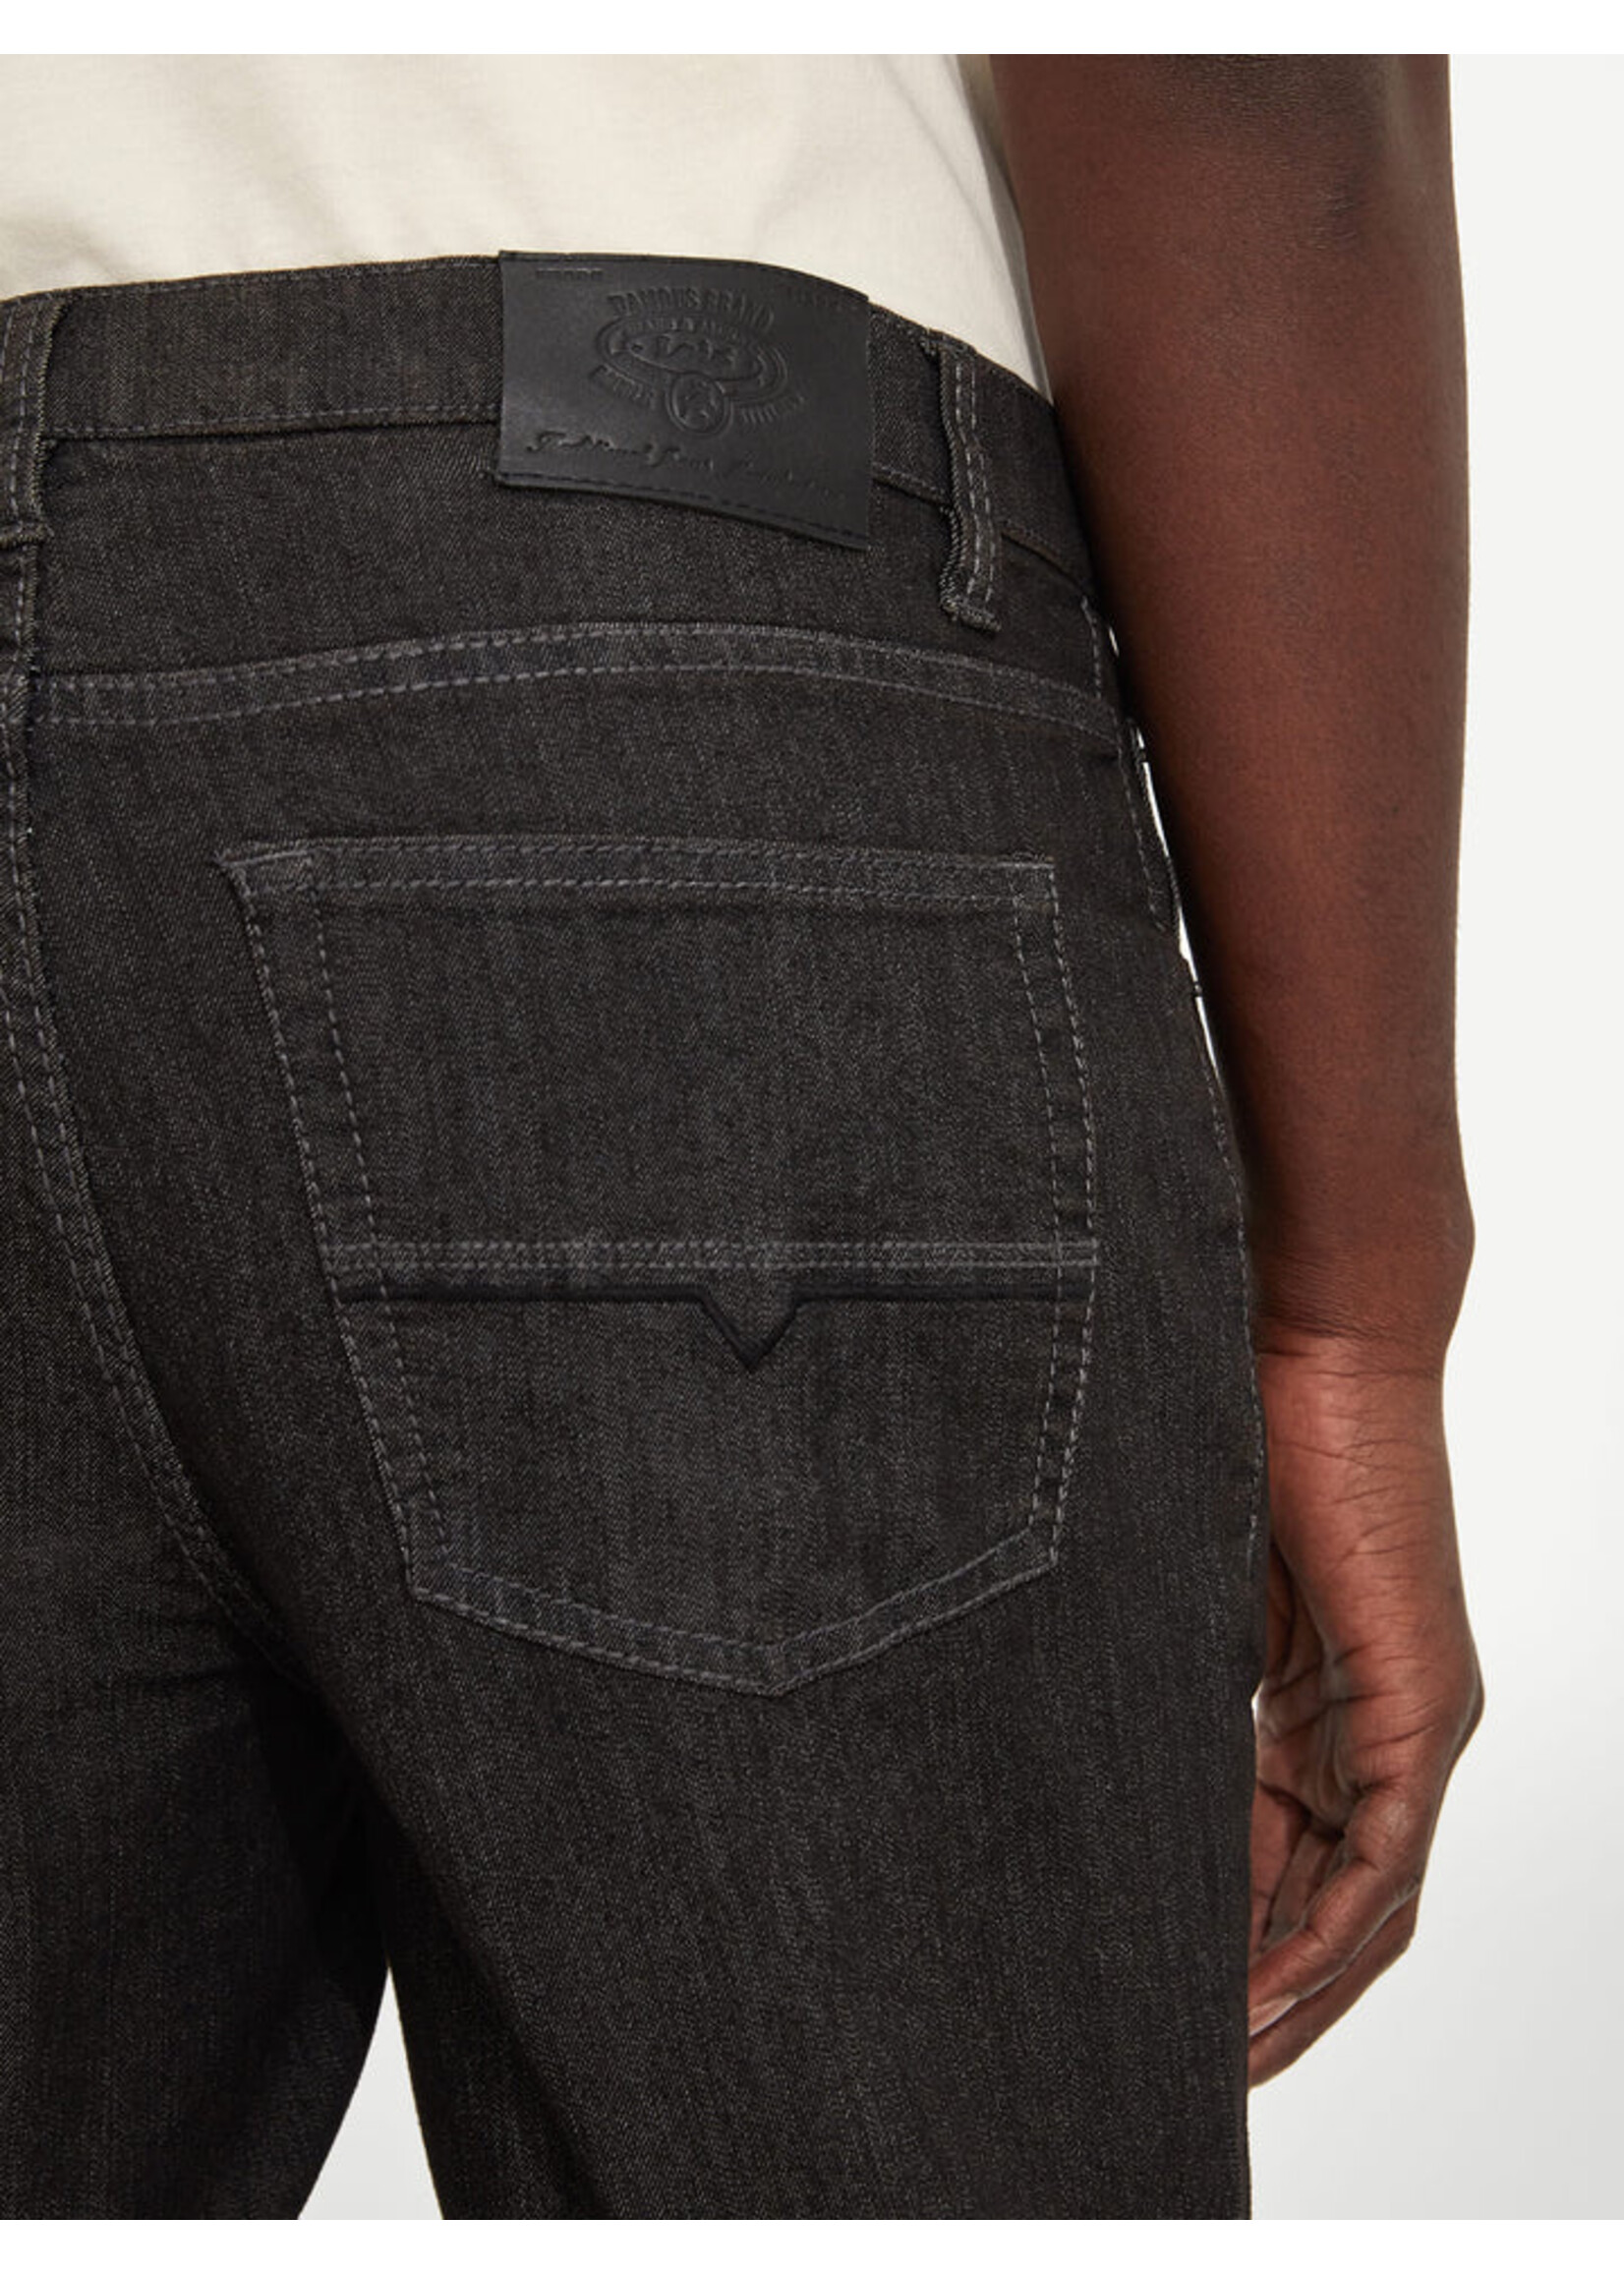 LOIS JEANS & JACKETS Men's traditional regular rize straight leg Brad jeans